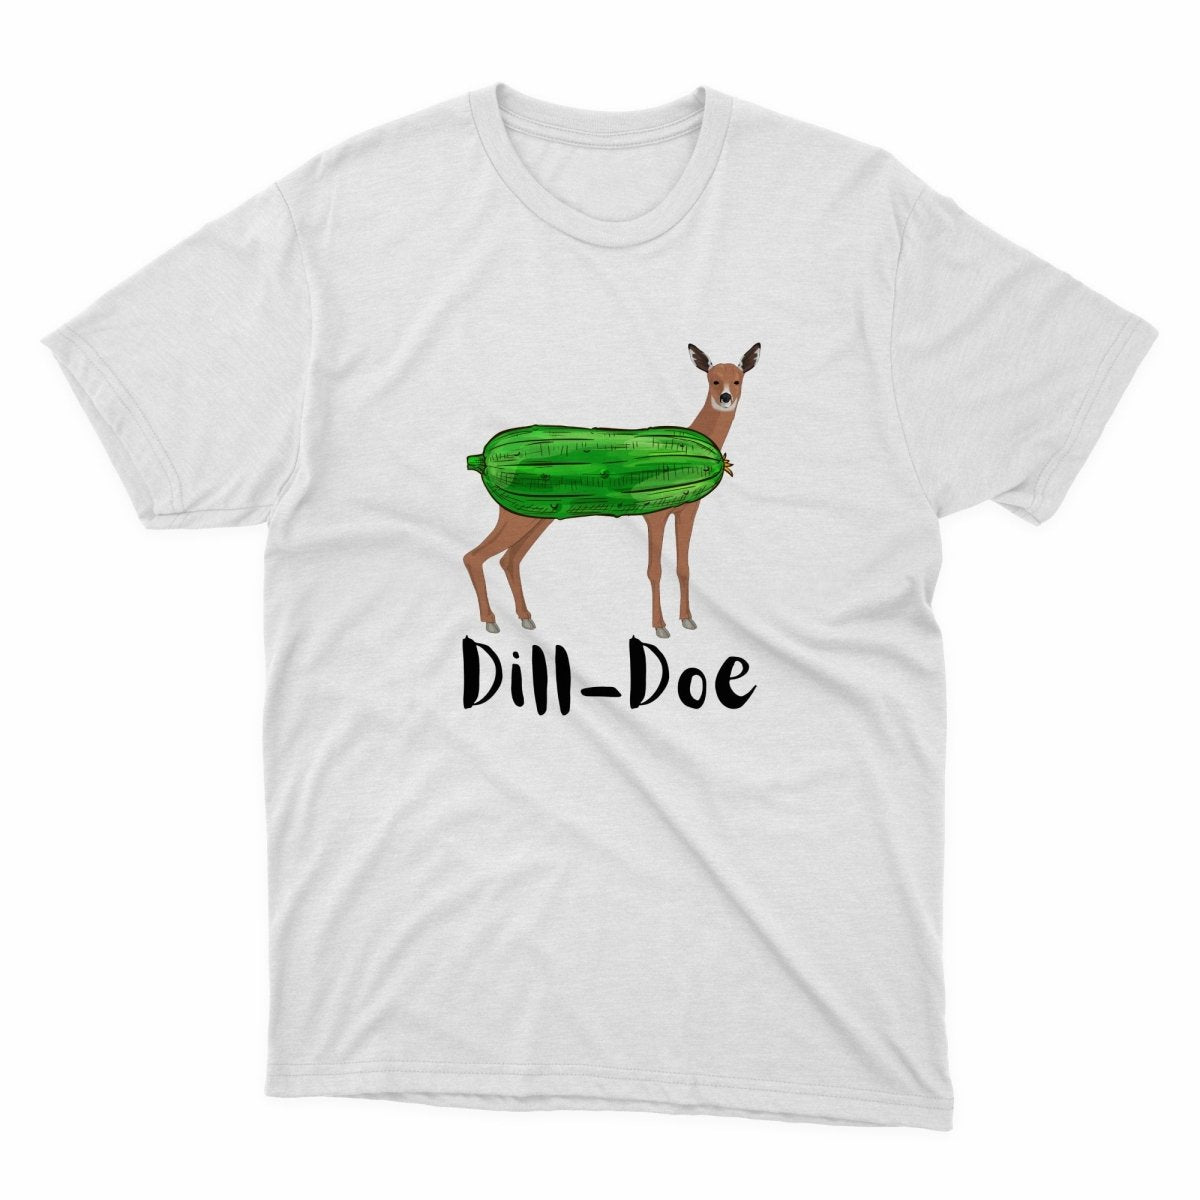 Dill Doe Shirt - stickerbullDill Doe ShirtShirtsPrintifystickerbull10313879128393263311WhiteSa white t - shirt with an image of a deer wearing a green bean bag